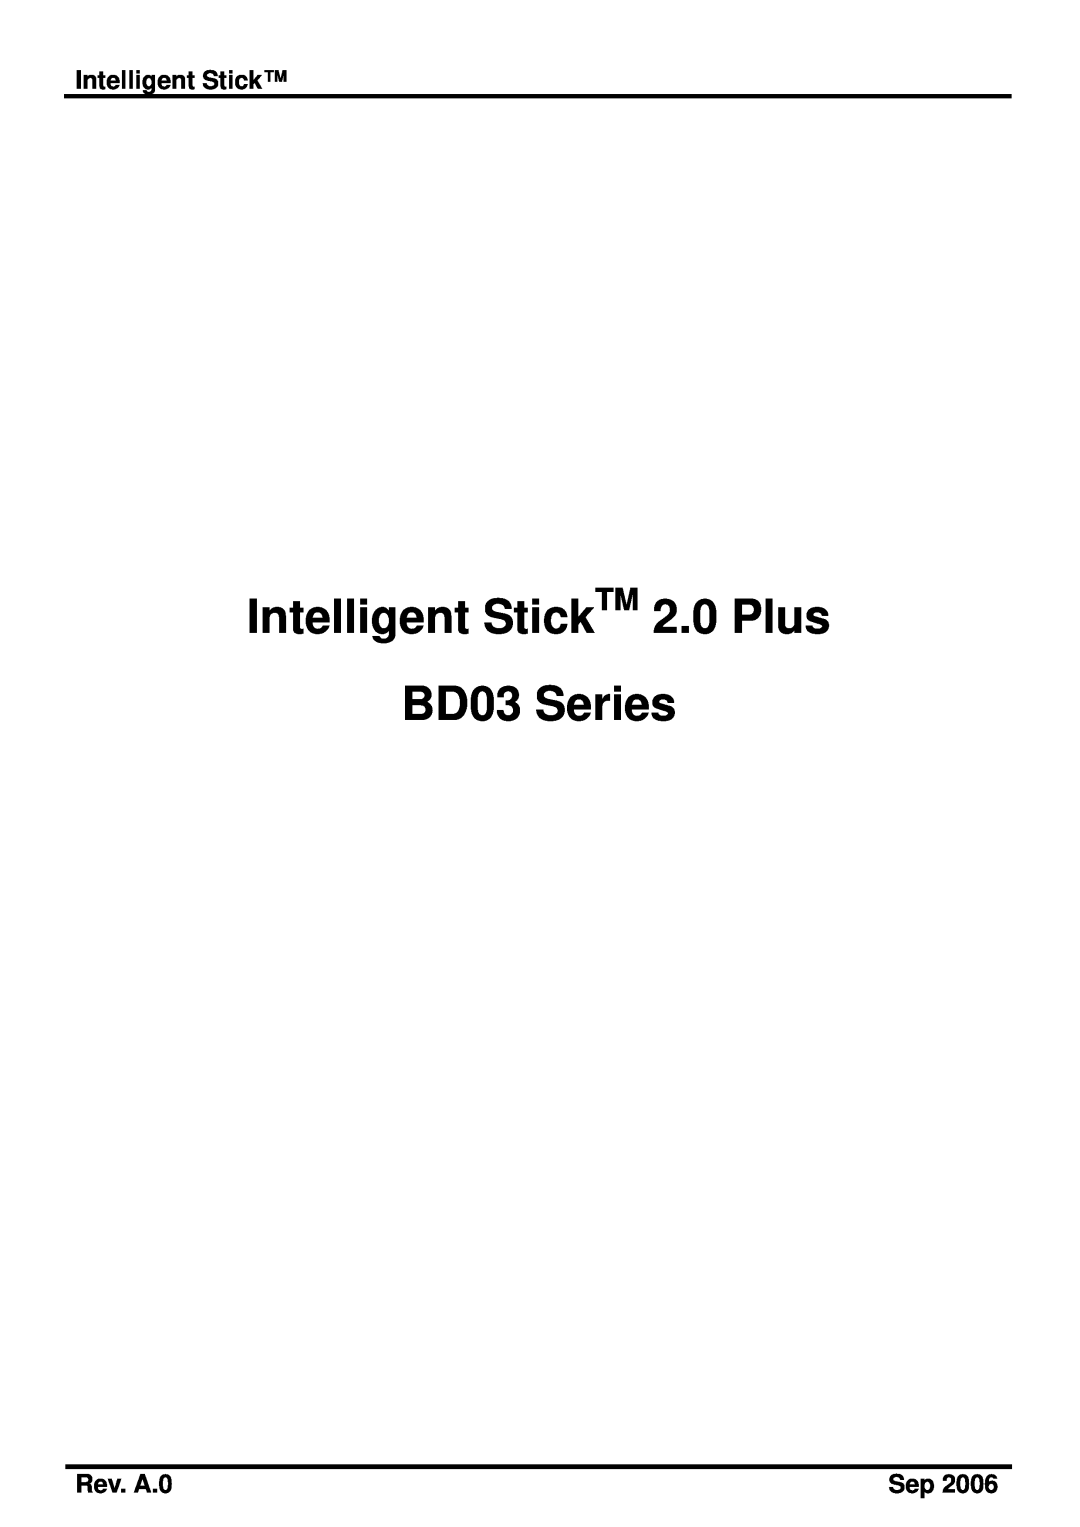 PQI manual Rev. A.0, Intelligent StickTM 2.0 Plus BD03 Series 